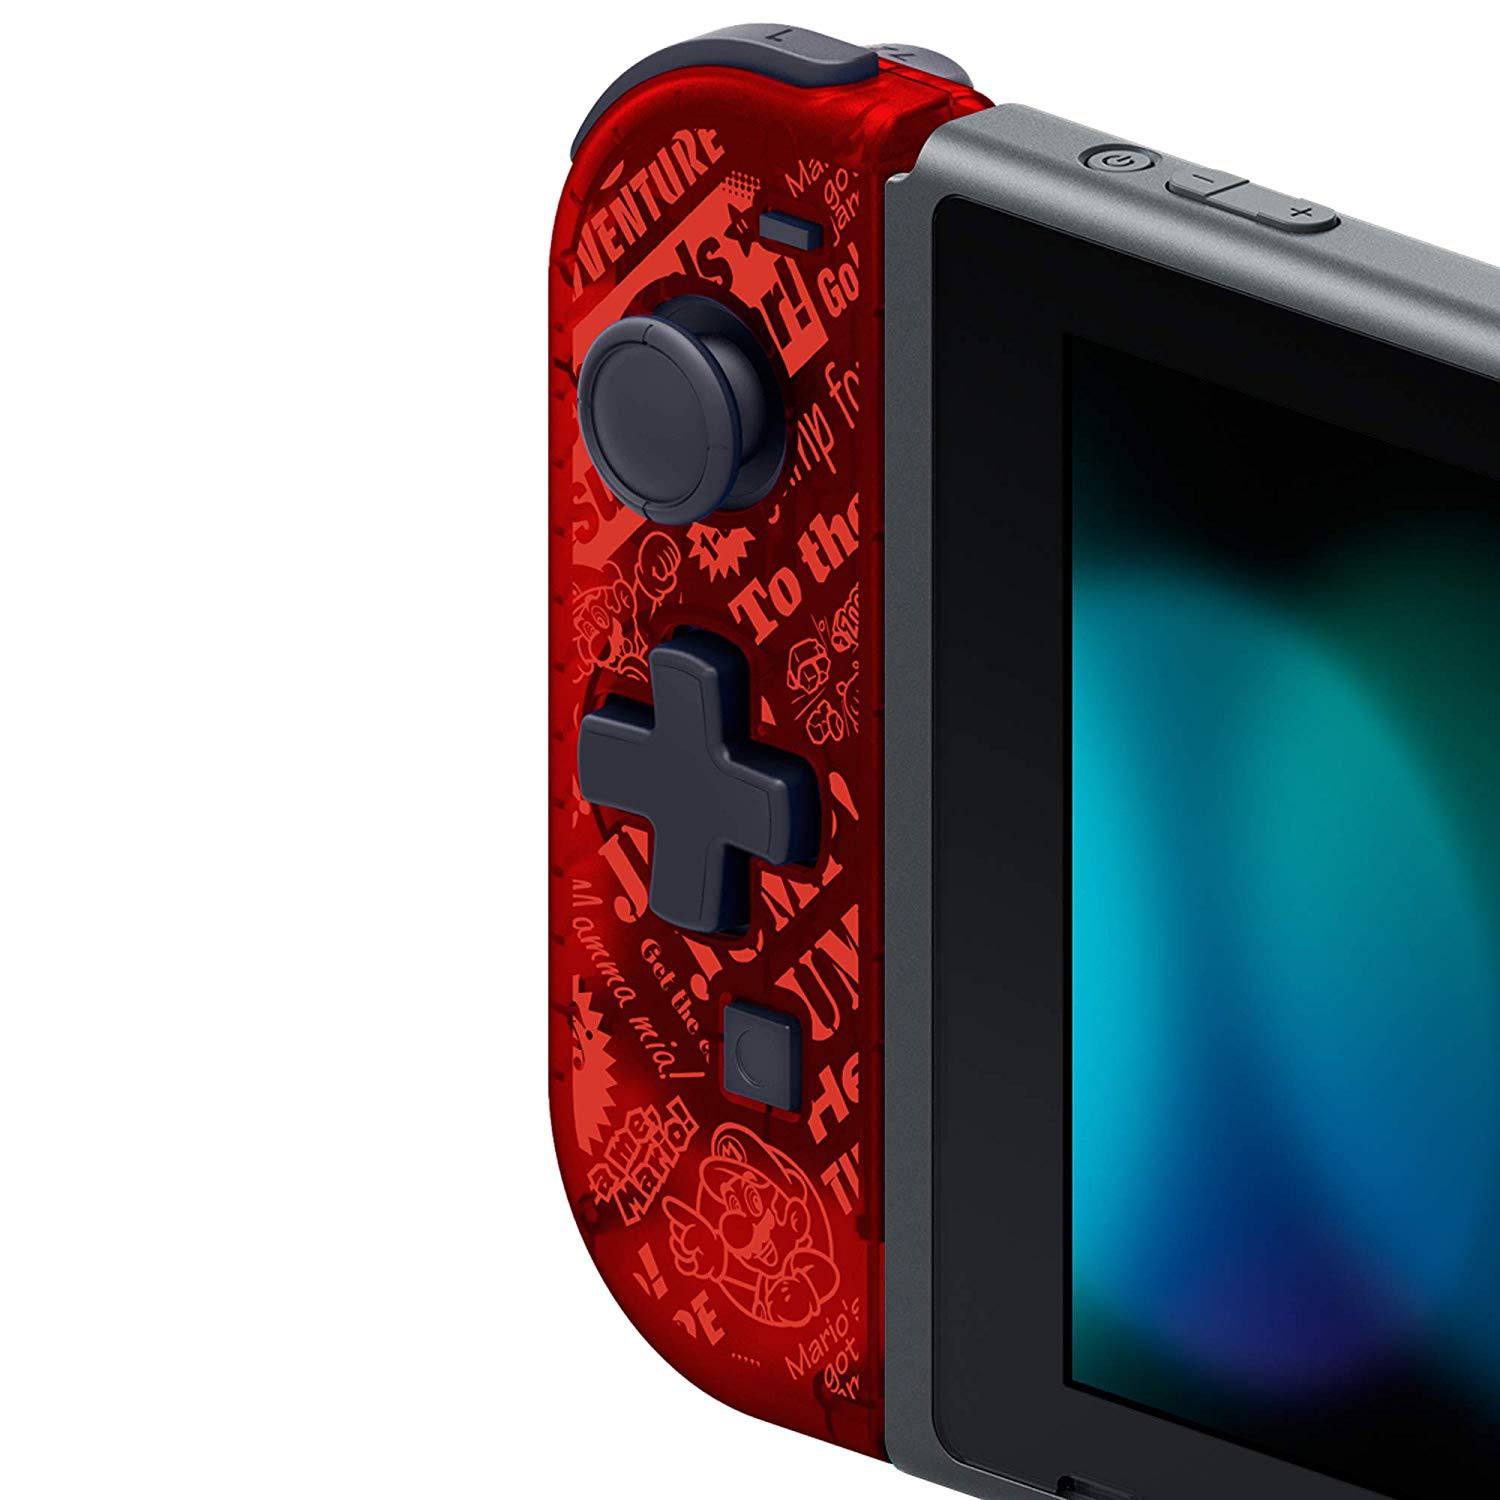 HORI D-pad Joy-Con Left Mario Version for Nintendo Switch